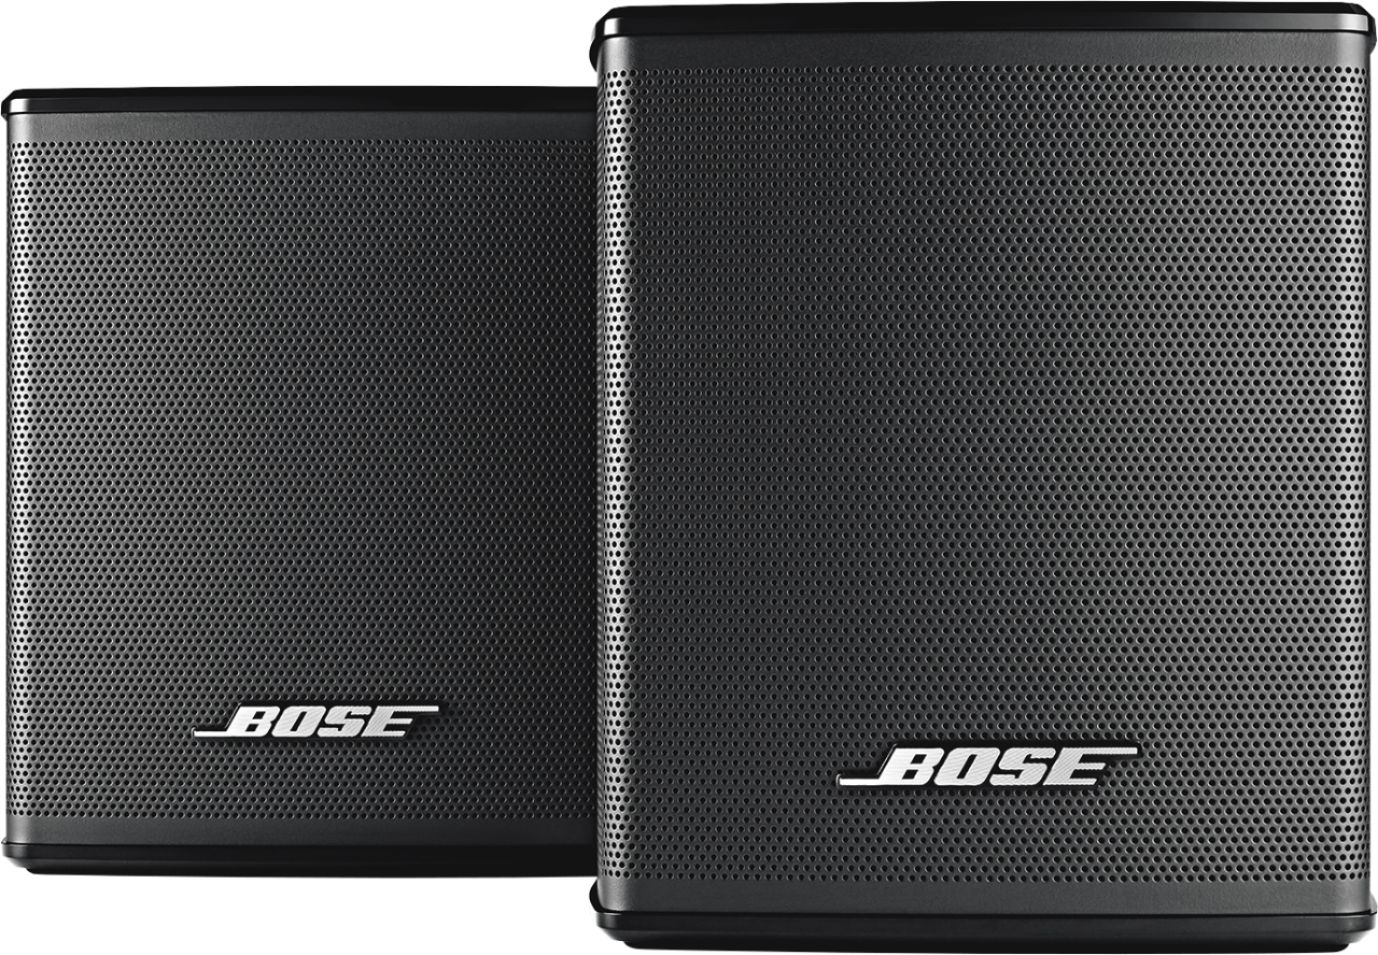 Om toestemming te geven geschiedenis misdrijf Bose Surround Speakers 120-Watt Wireless Home Theater Speakers (Pair) Black  809281-1100 - Best Buy